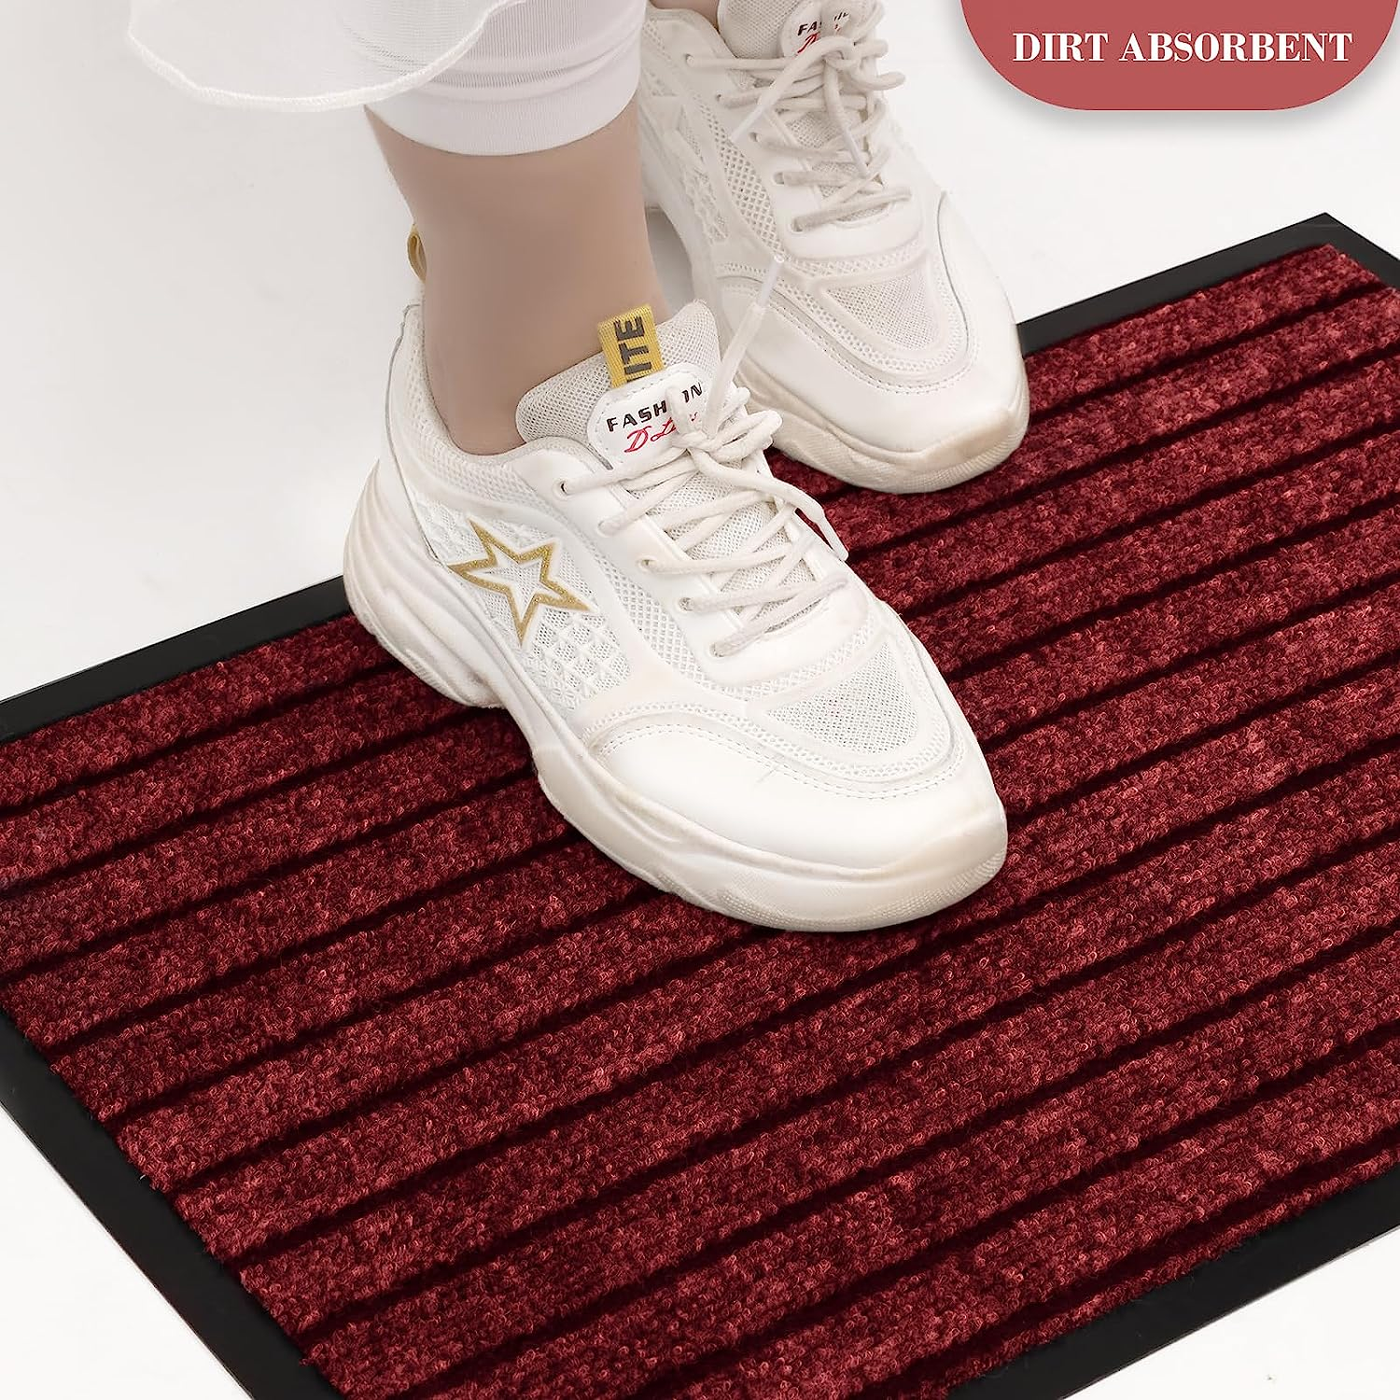 Floor Mats Extra Long Washable Anti Slip Burgundy